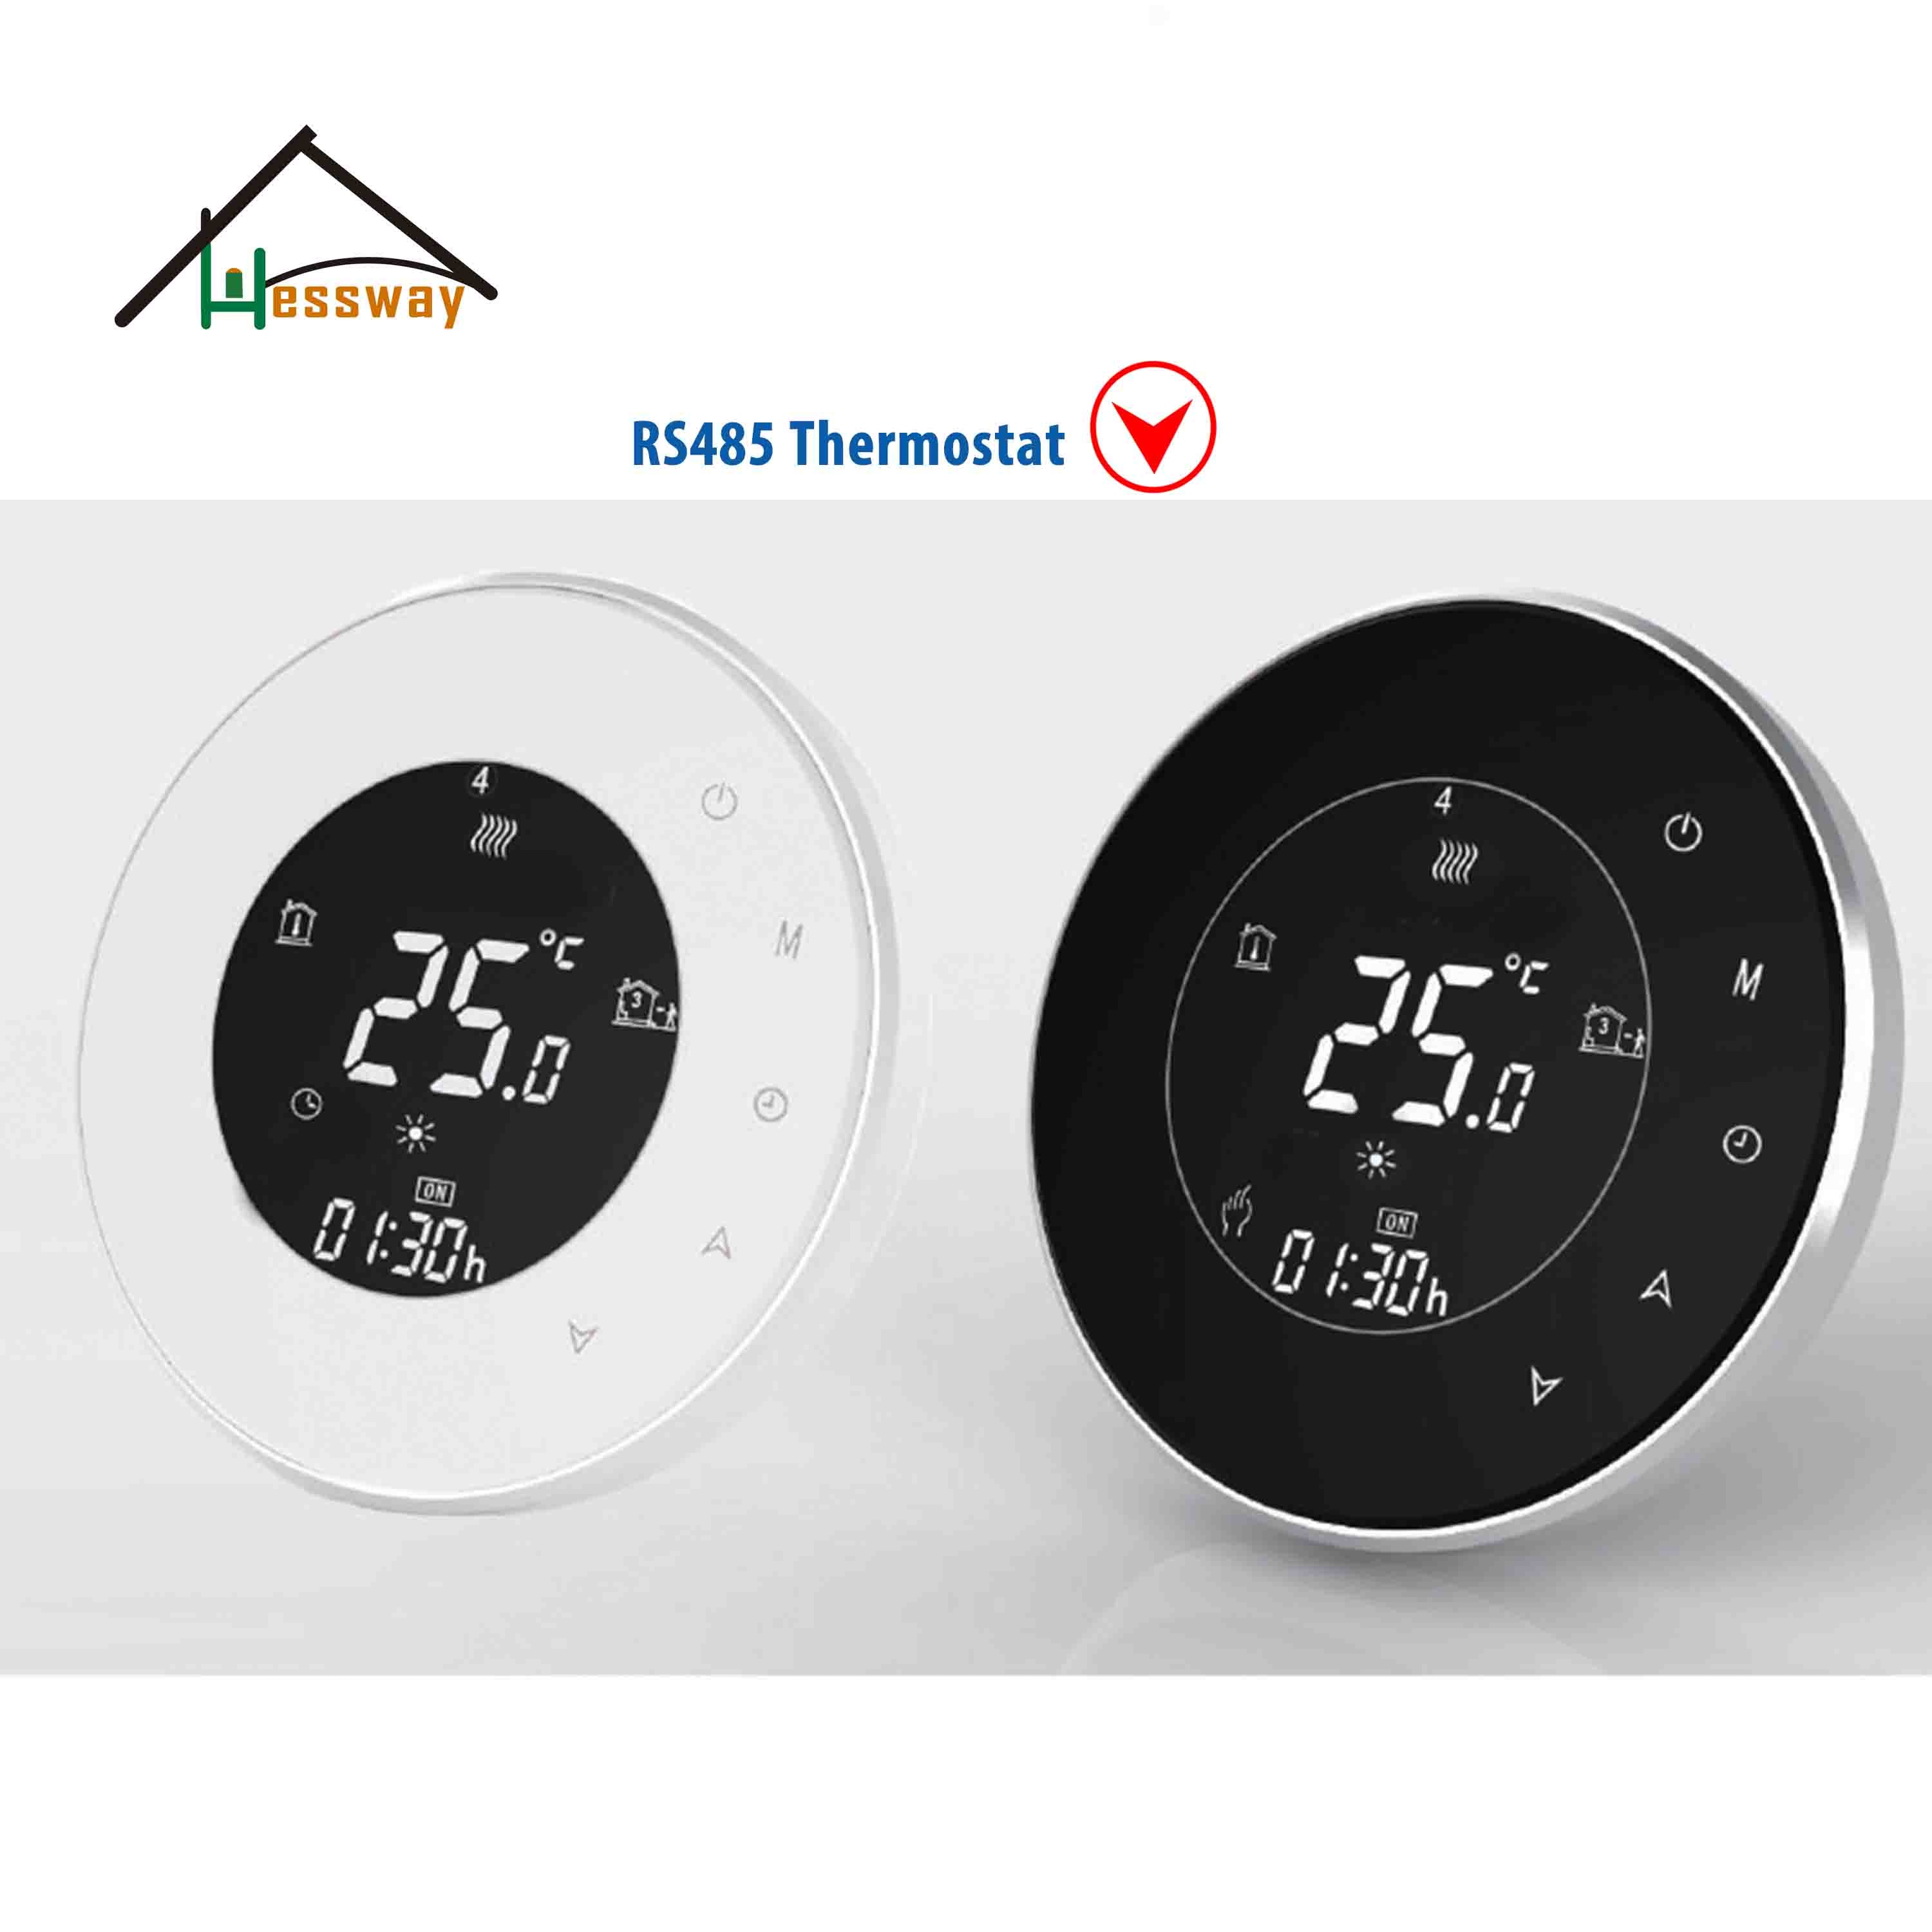 Hessway termostatventil modbus & rs485 termostat til vandvarmer nc ingen afbryder